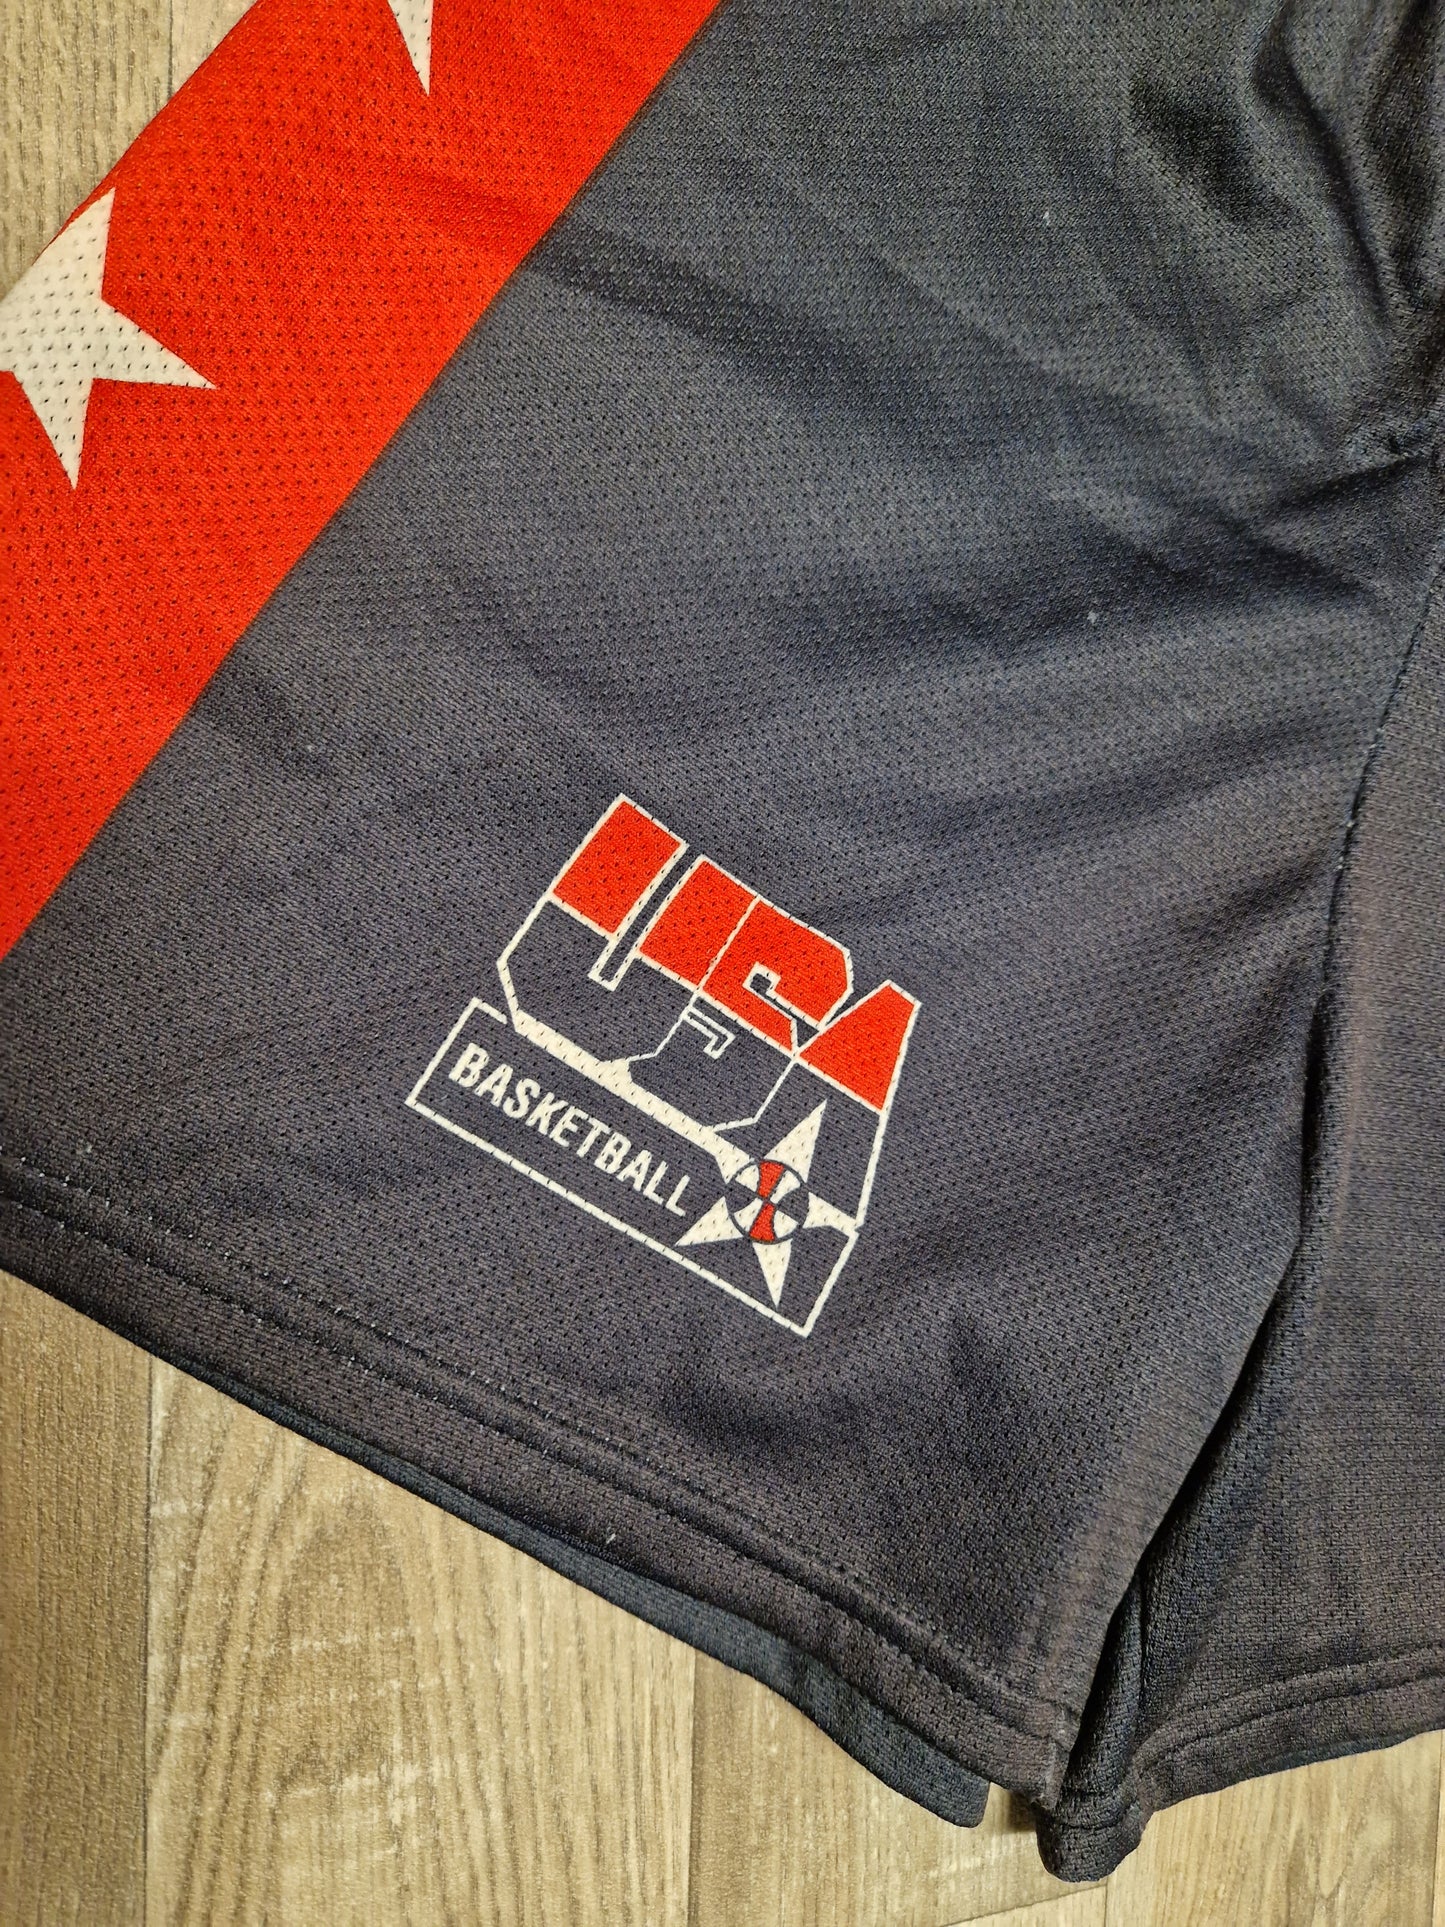 Team USA Shorts Size Small